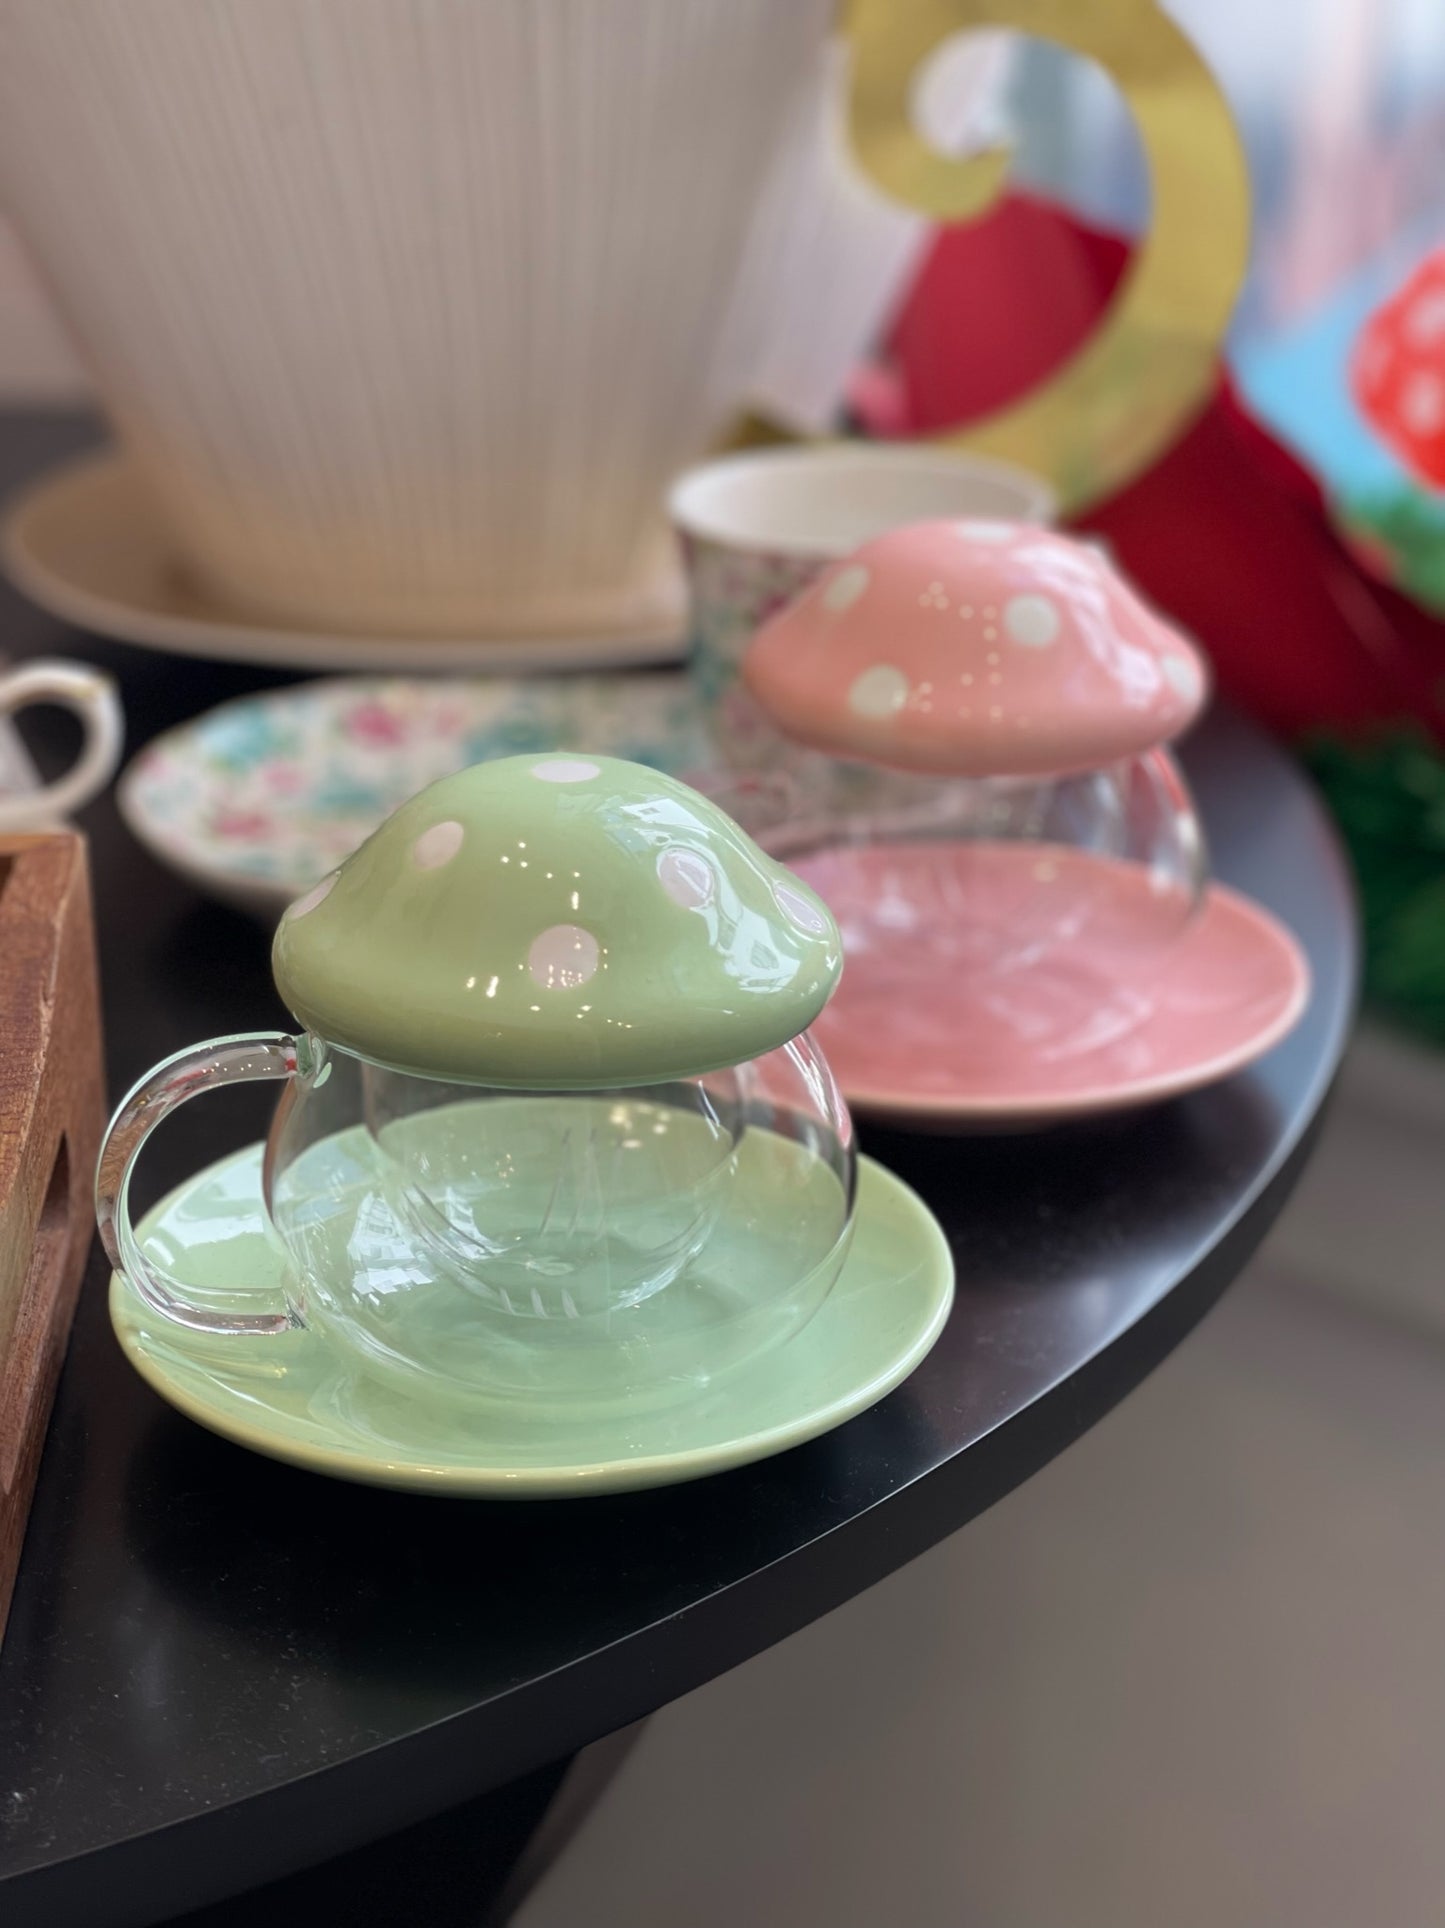 Mushroom Tea Cup with Removable Strainer Filter Infuser for Loose Leaf Tea